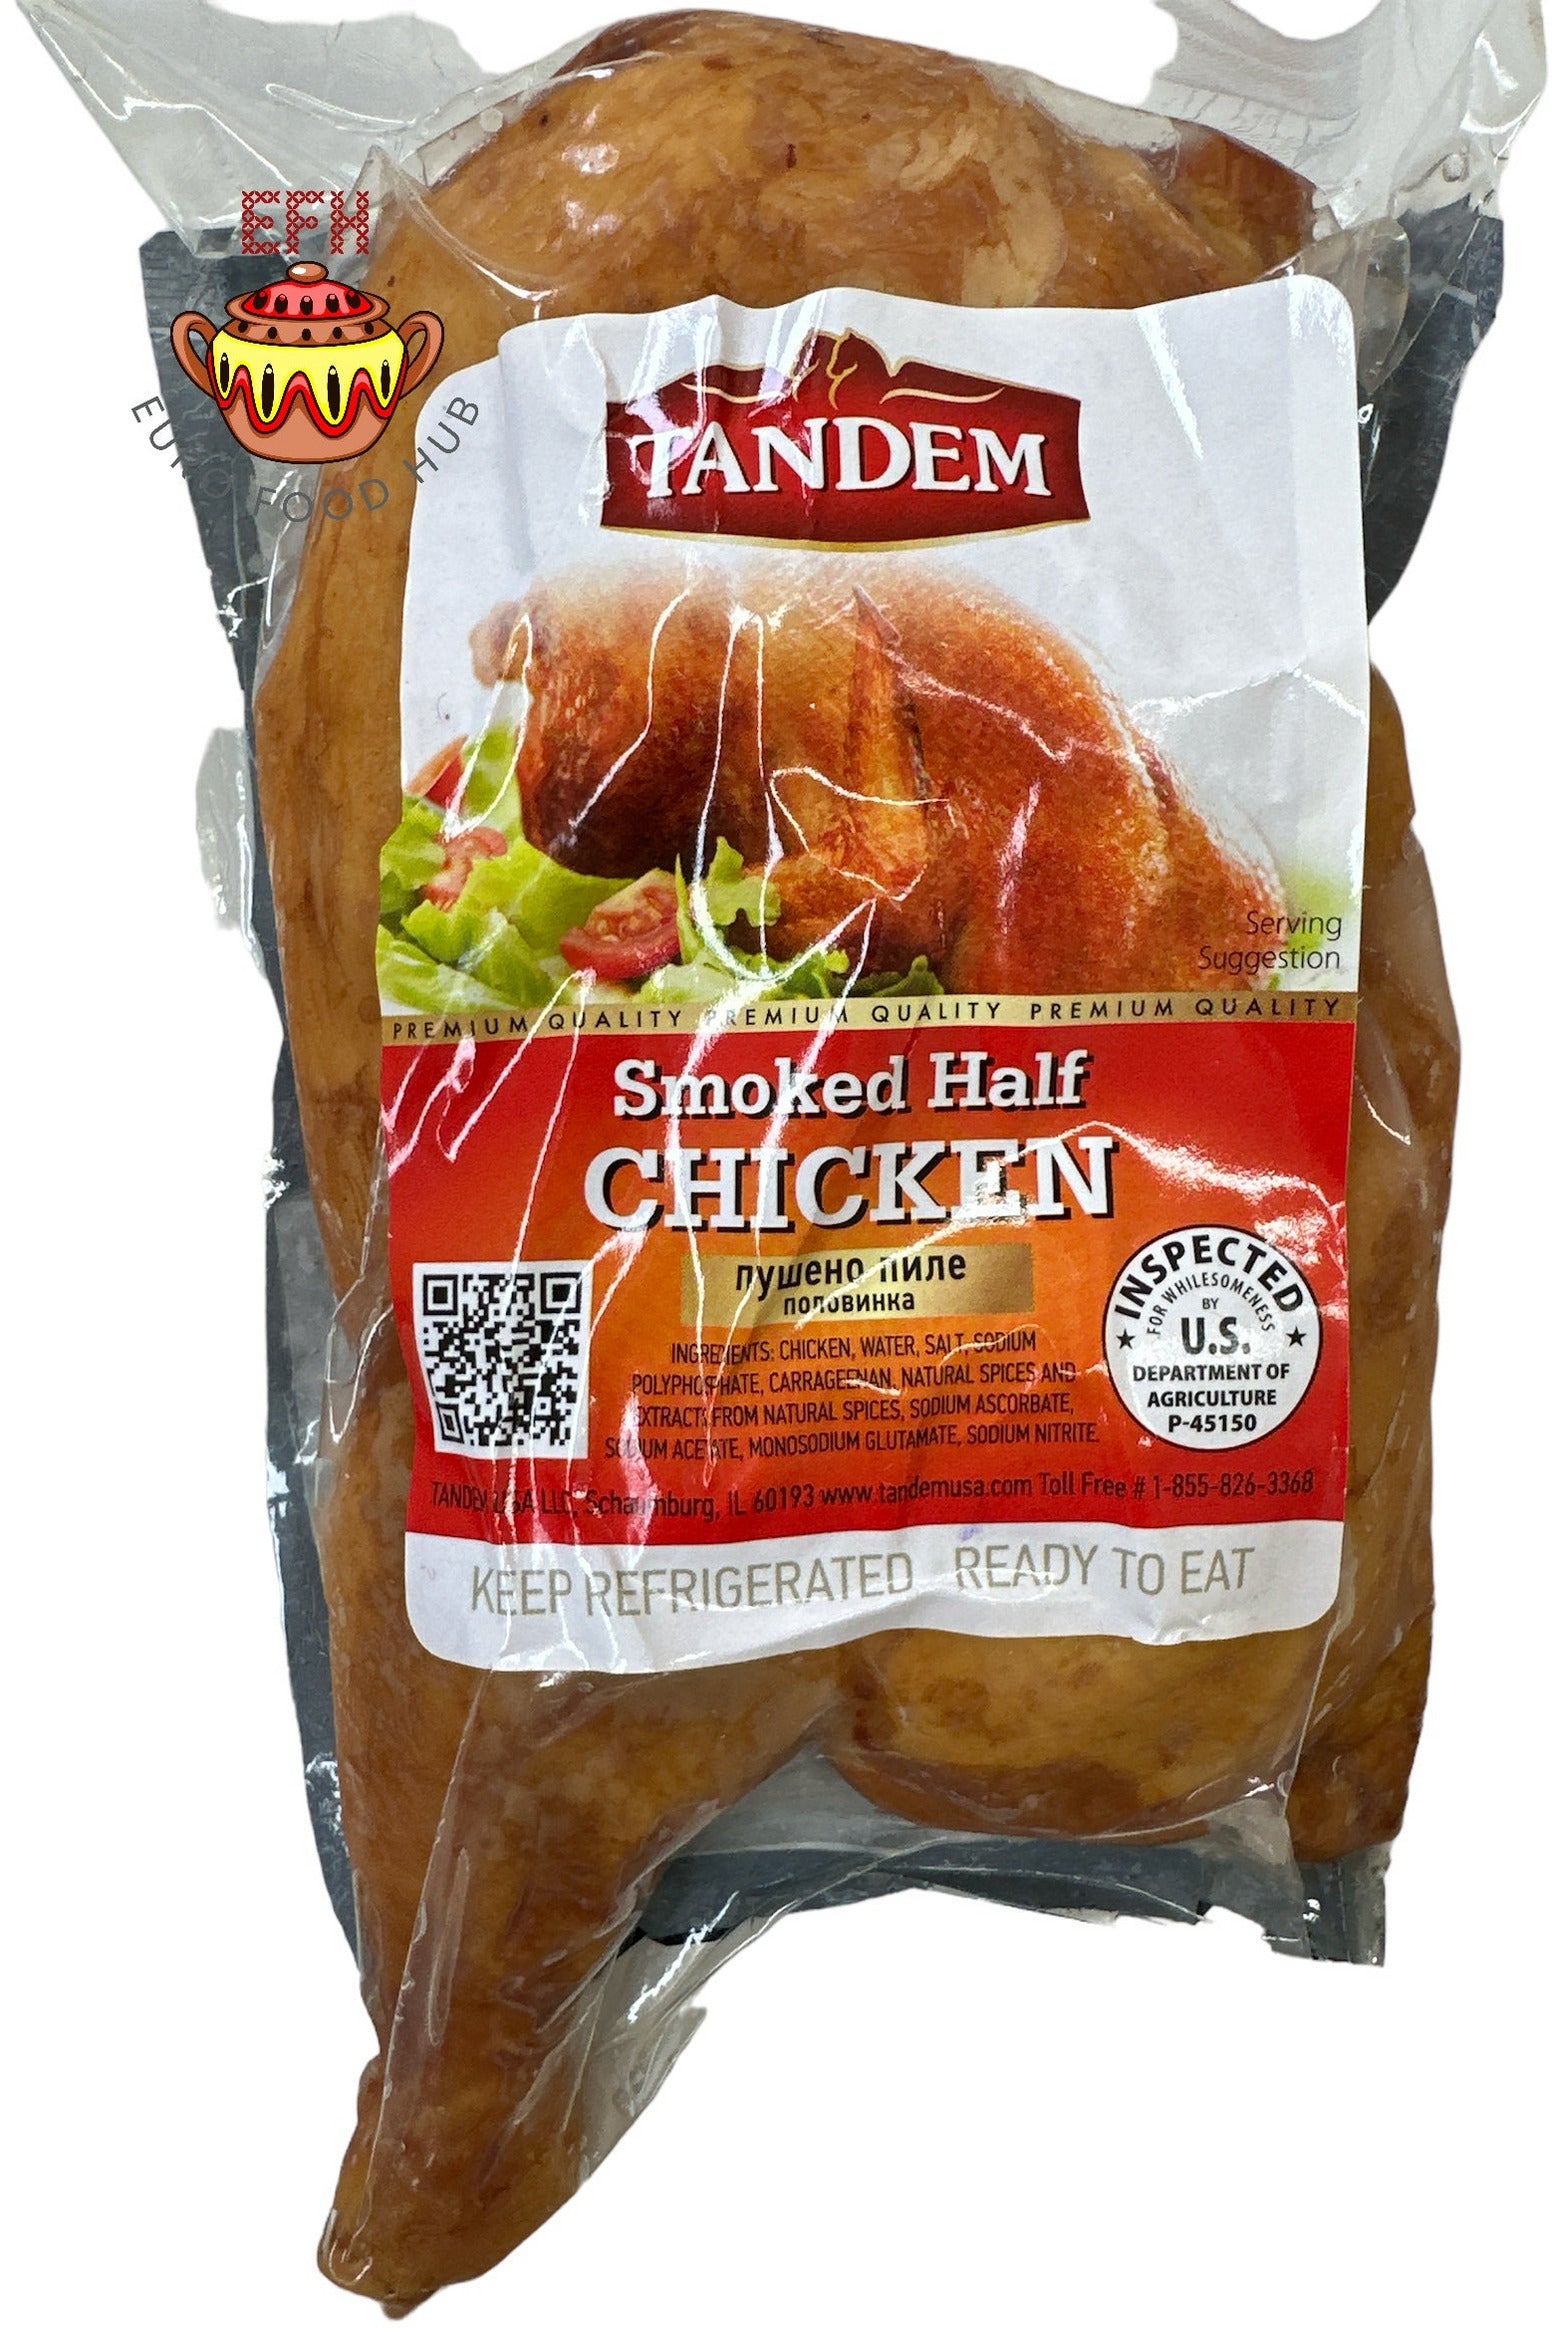 Smoked Half Chicken - TANDEM - 1.5 lbs